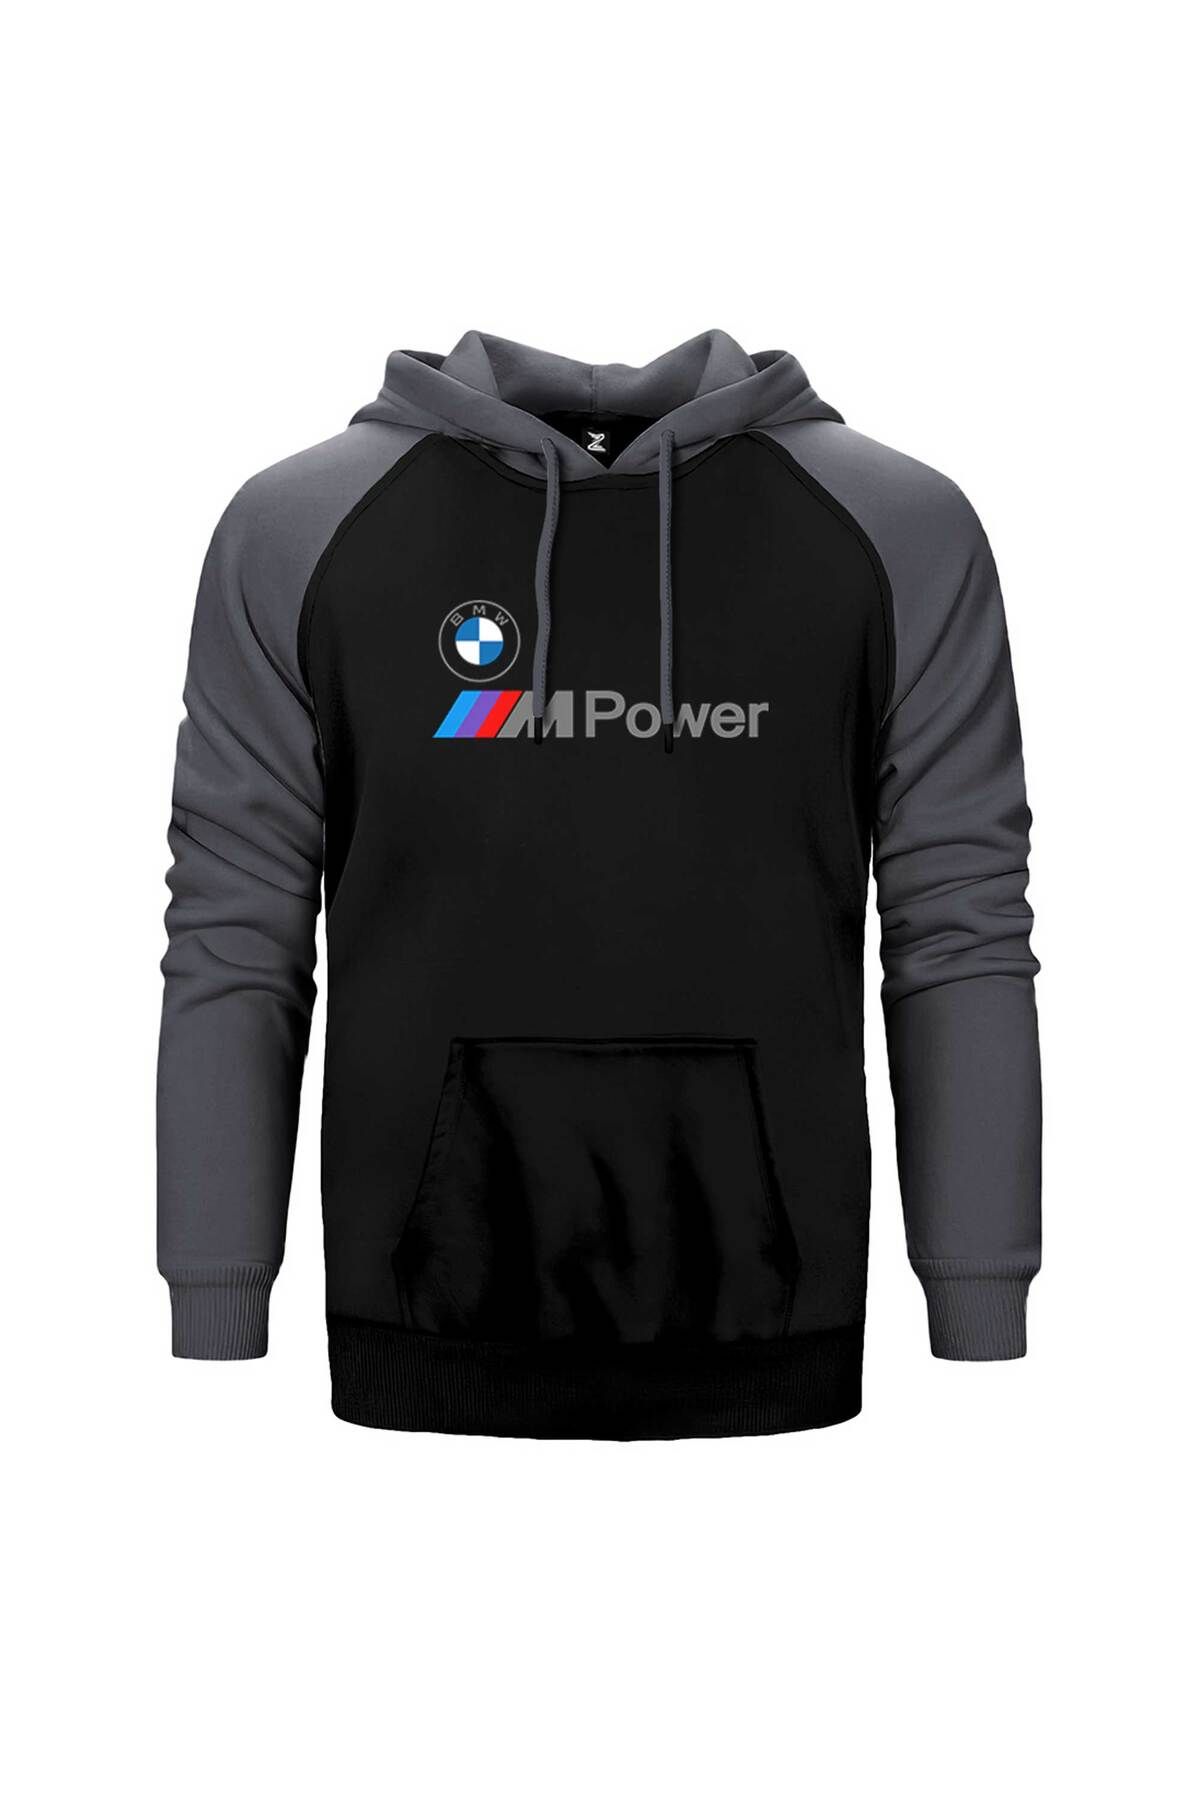 Z zepplin BMW Logo M Power Yazı Gri Renk Reglan Kol Kapşonlu Sweatshirt